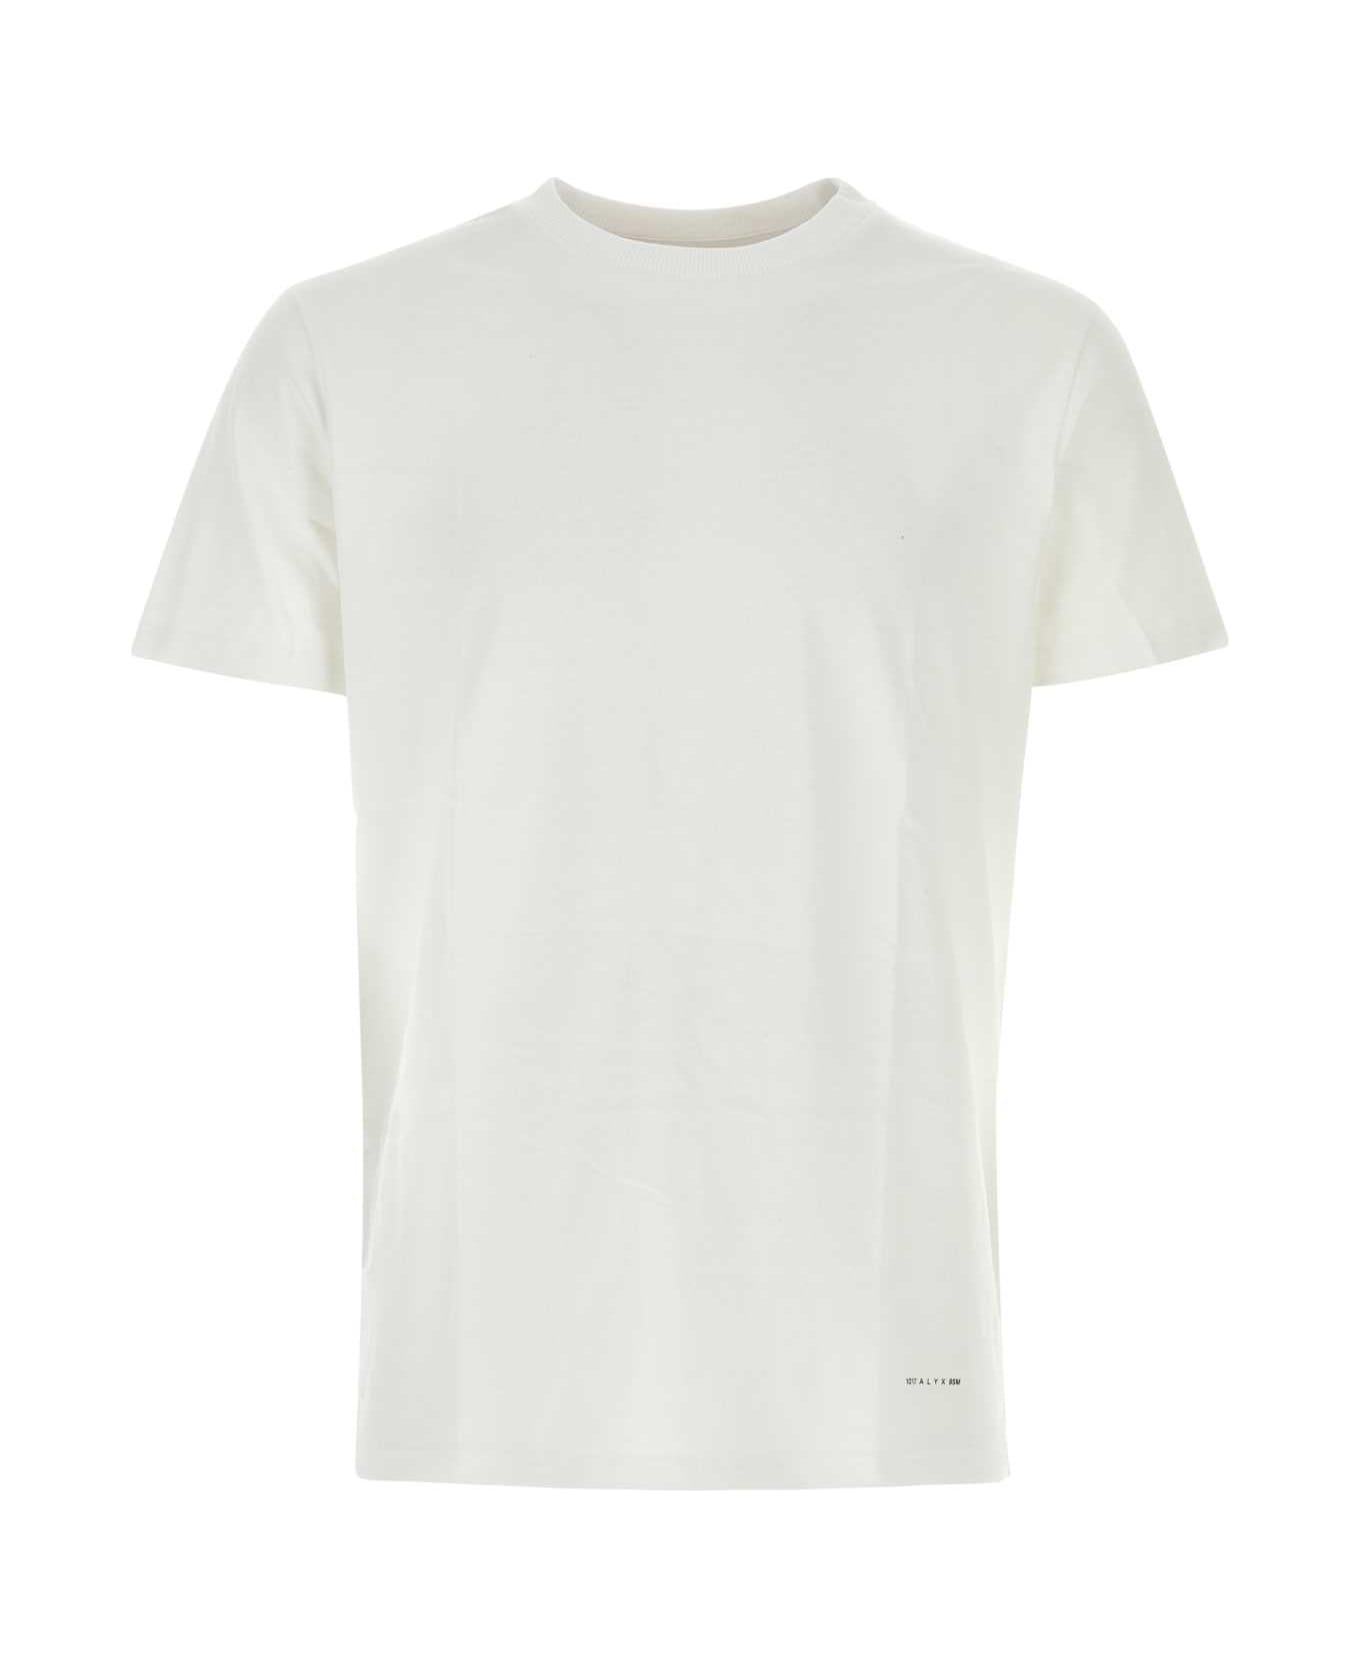 1017 ALYX 9SM White Cotton T-shirt Set - WTH0001 Tシャツ